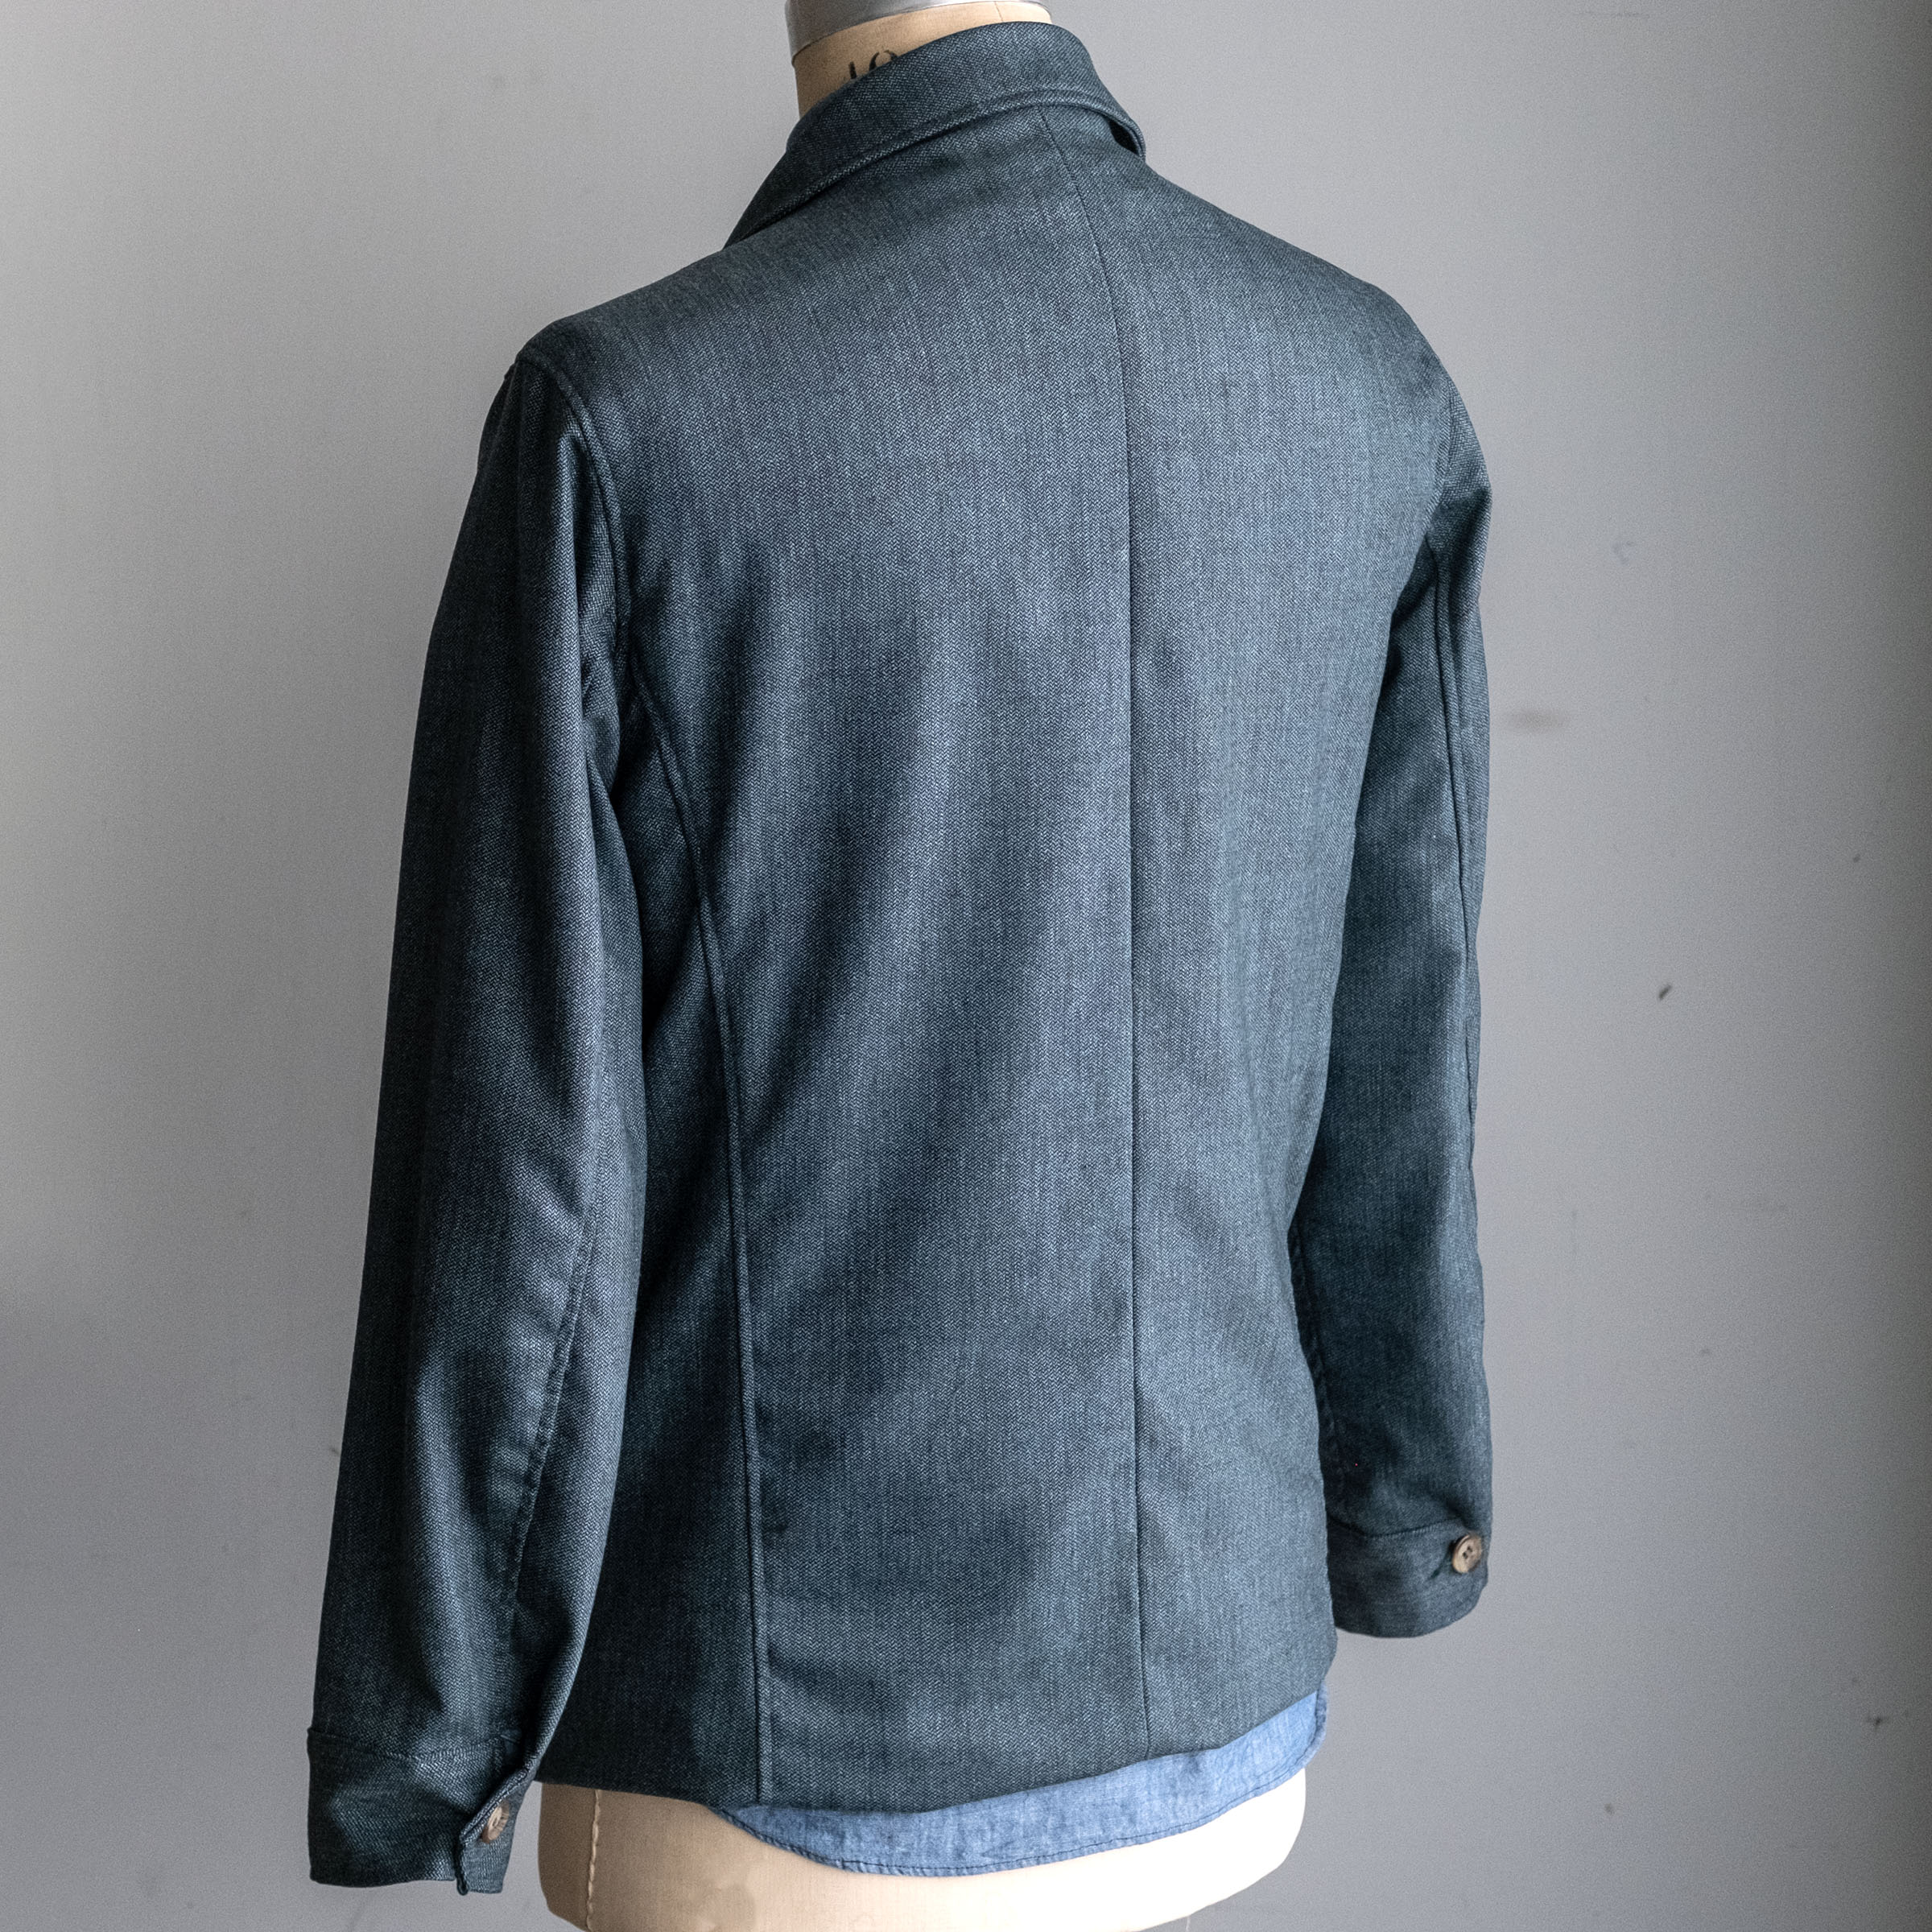 Corso Jacket in Jade Turquoise Tropical Wool & Silk